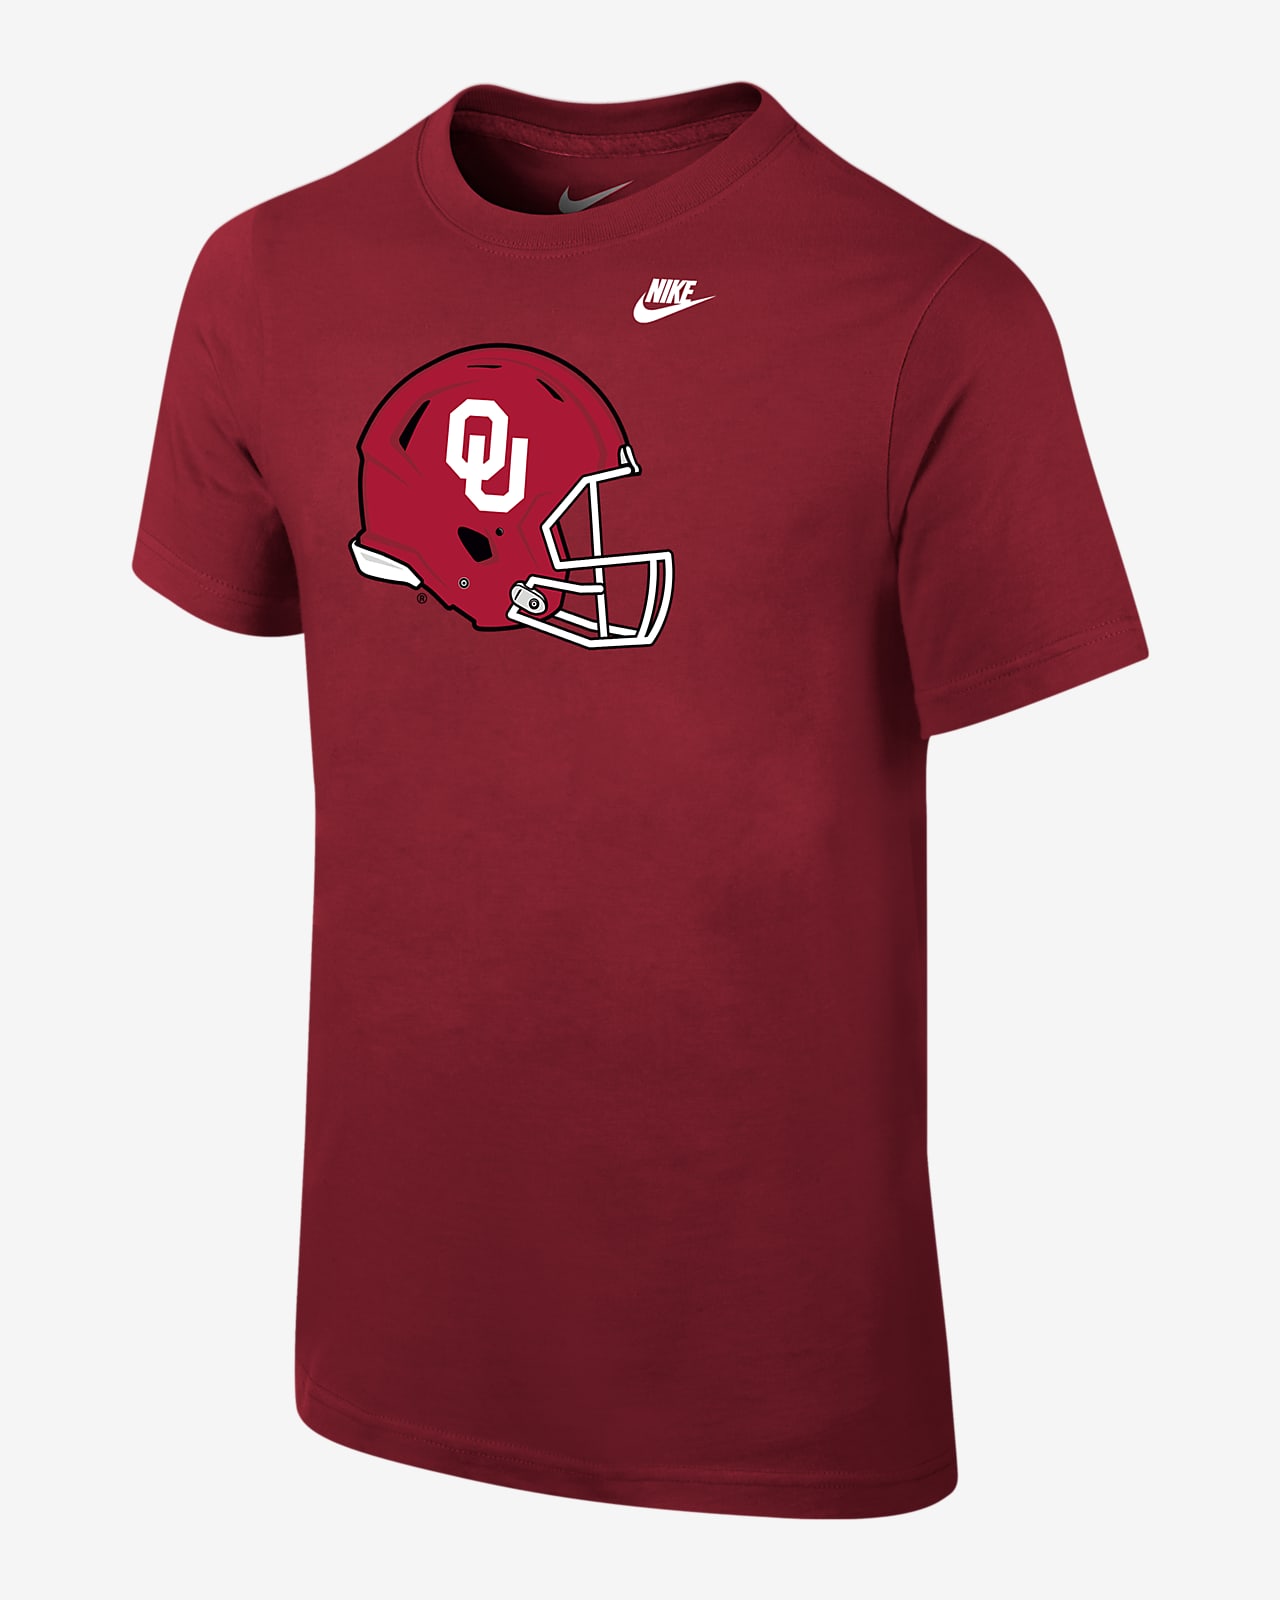 Oklahoma Big Kids' (Boys') Nike College T-Shirt